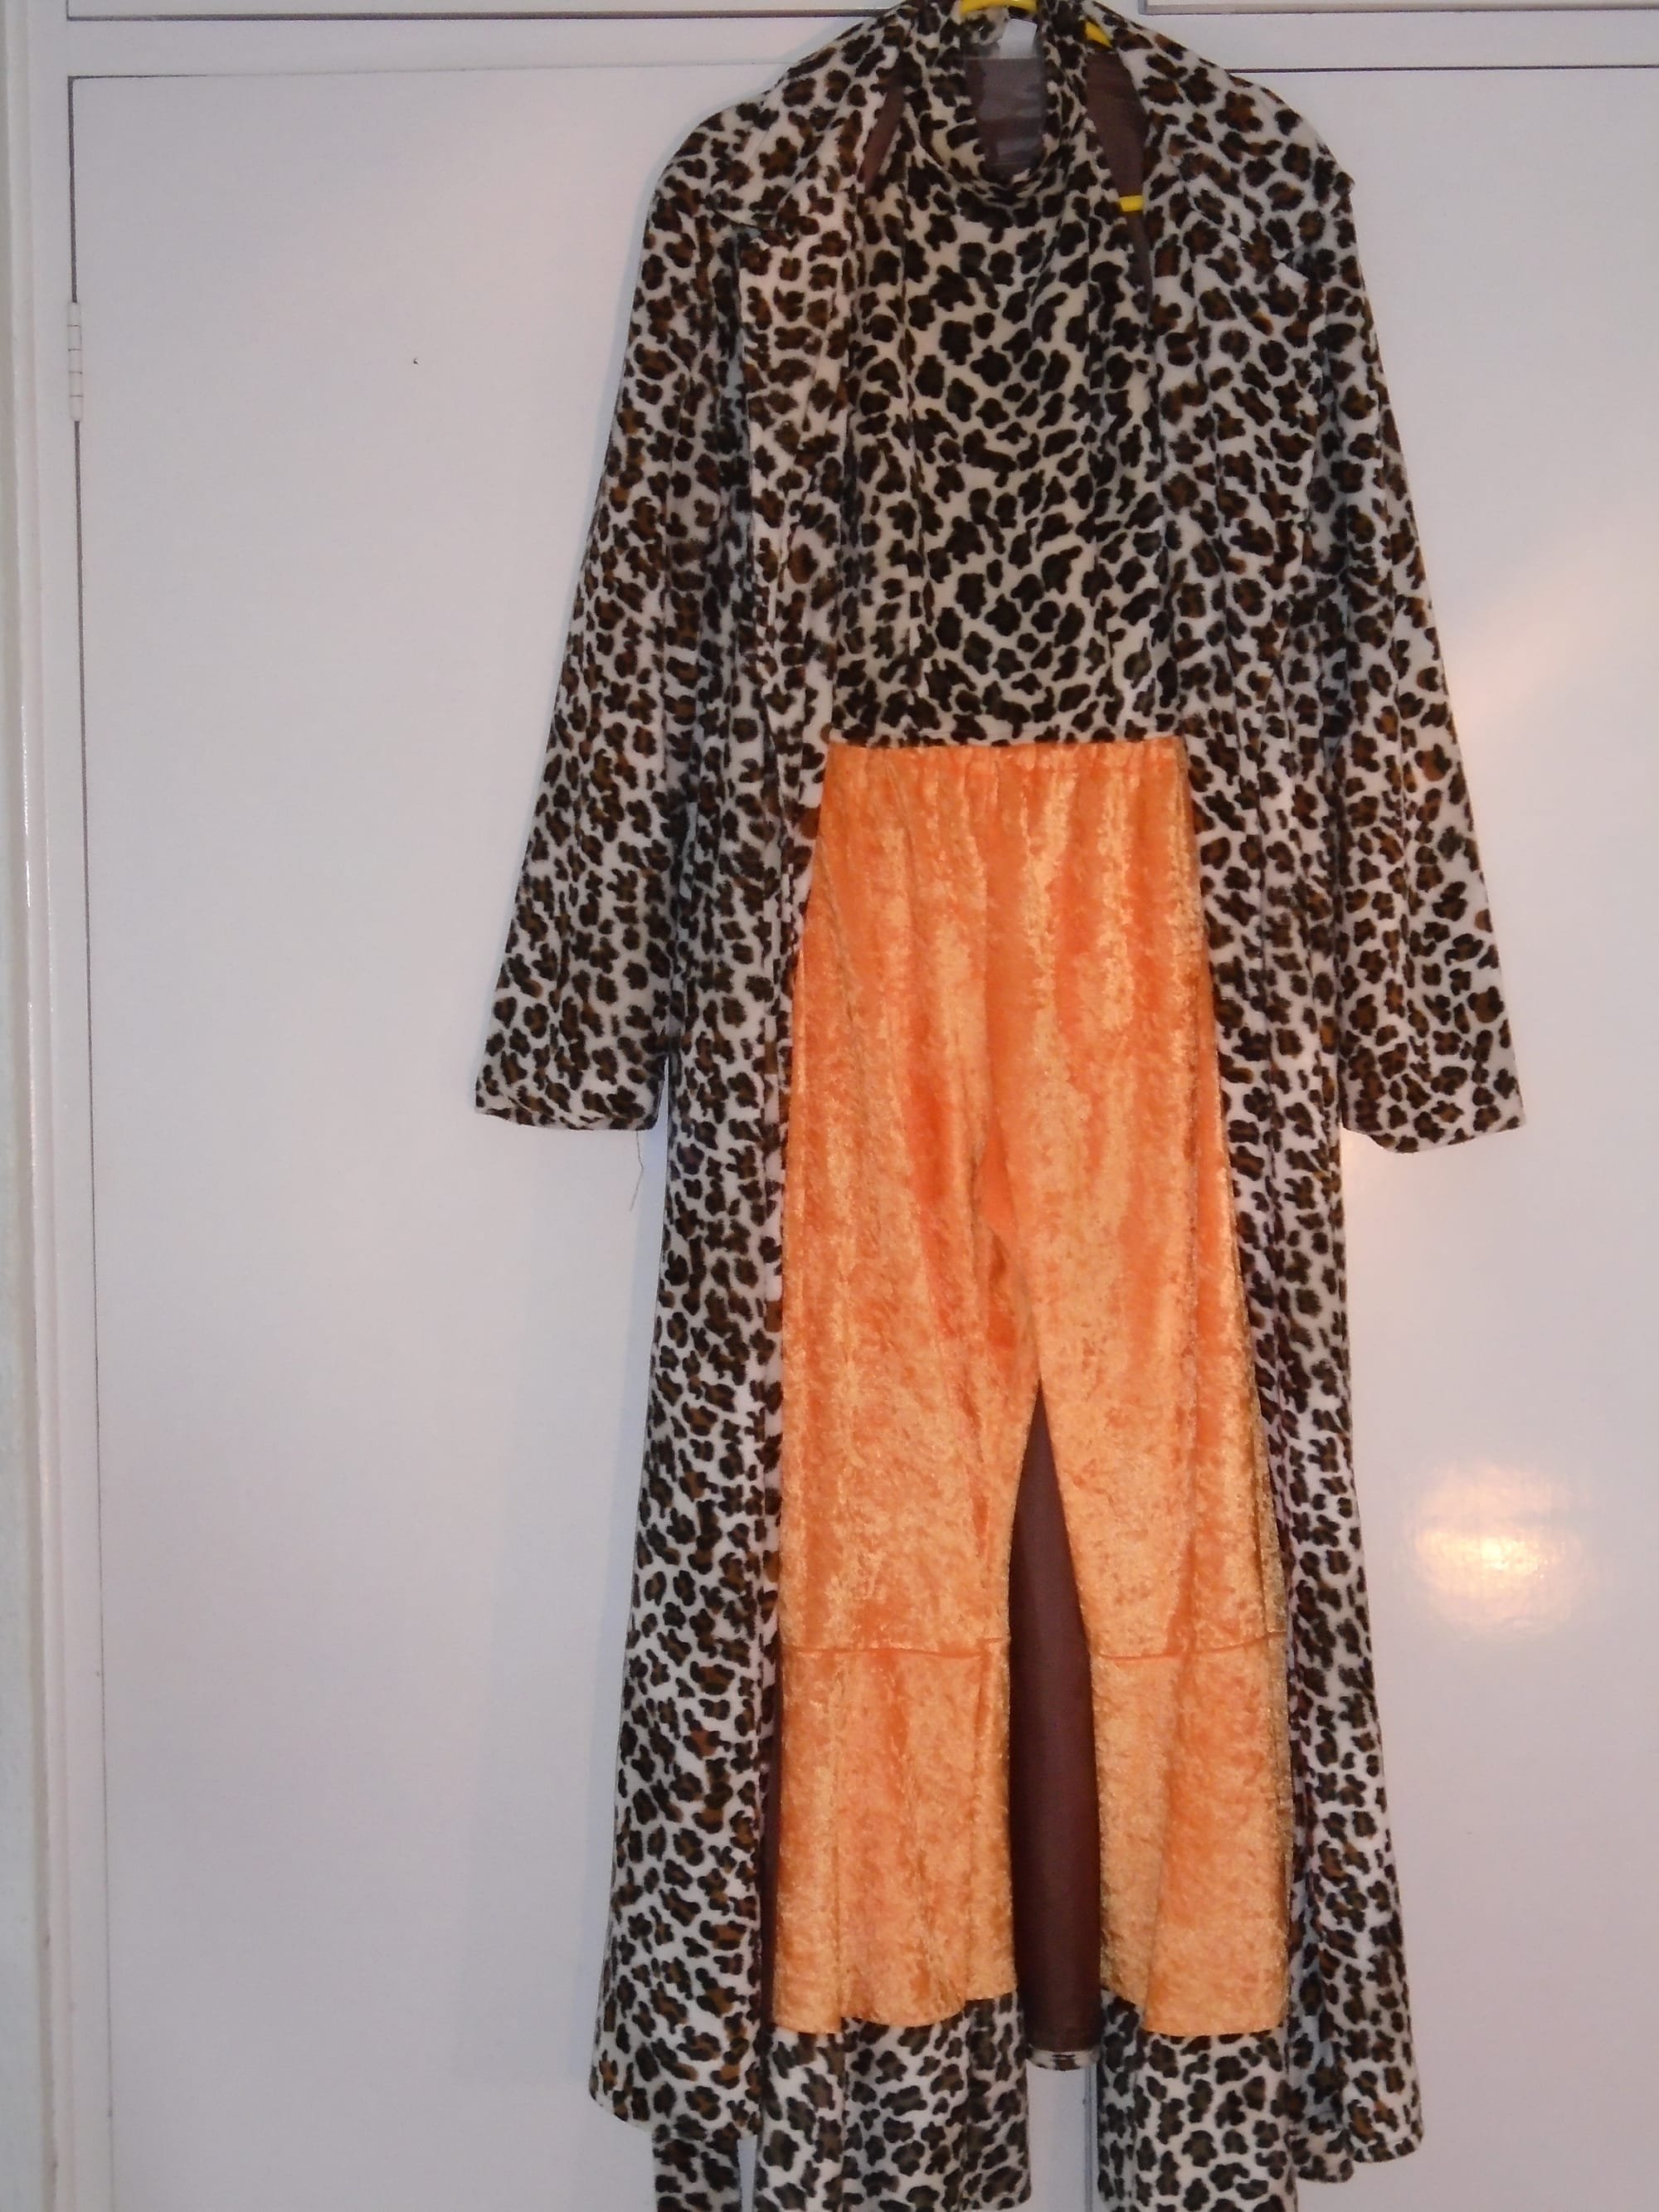 904 Leopard Print 70s Outfit 3 pc